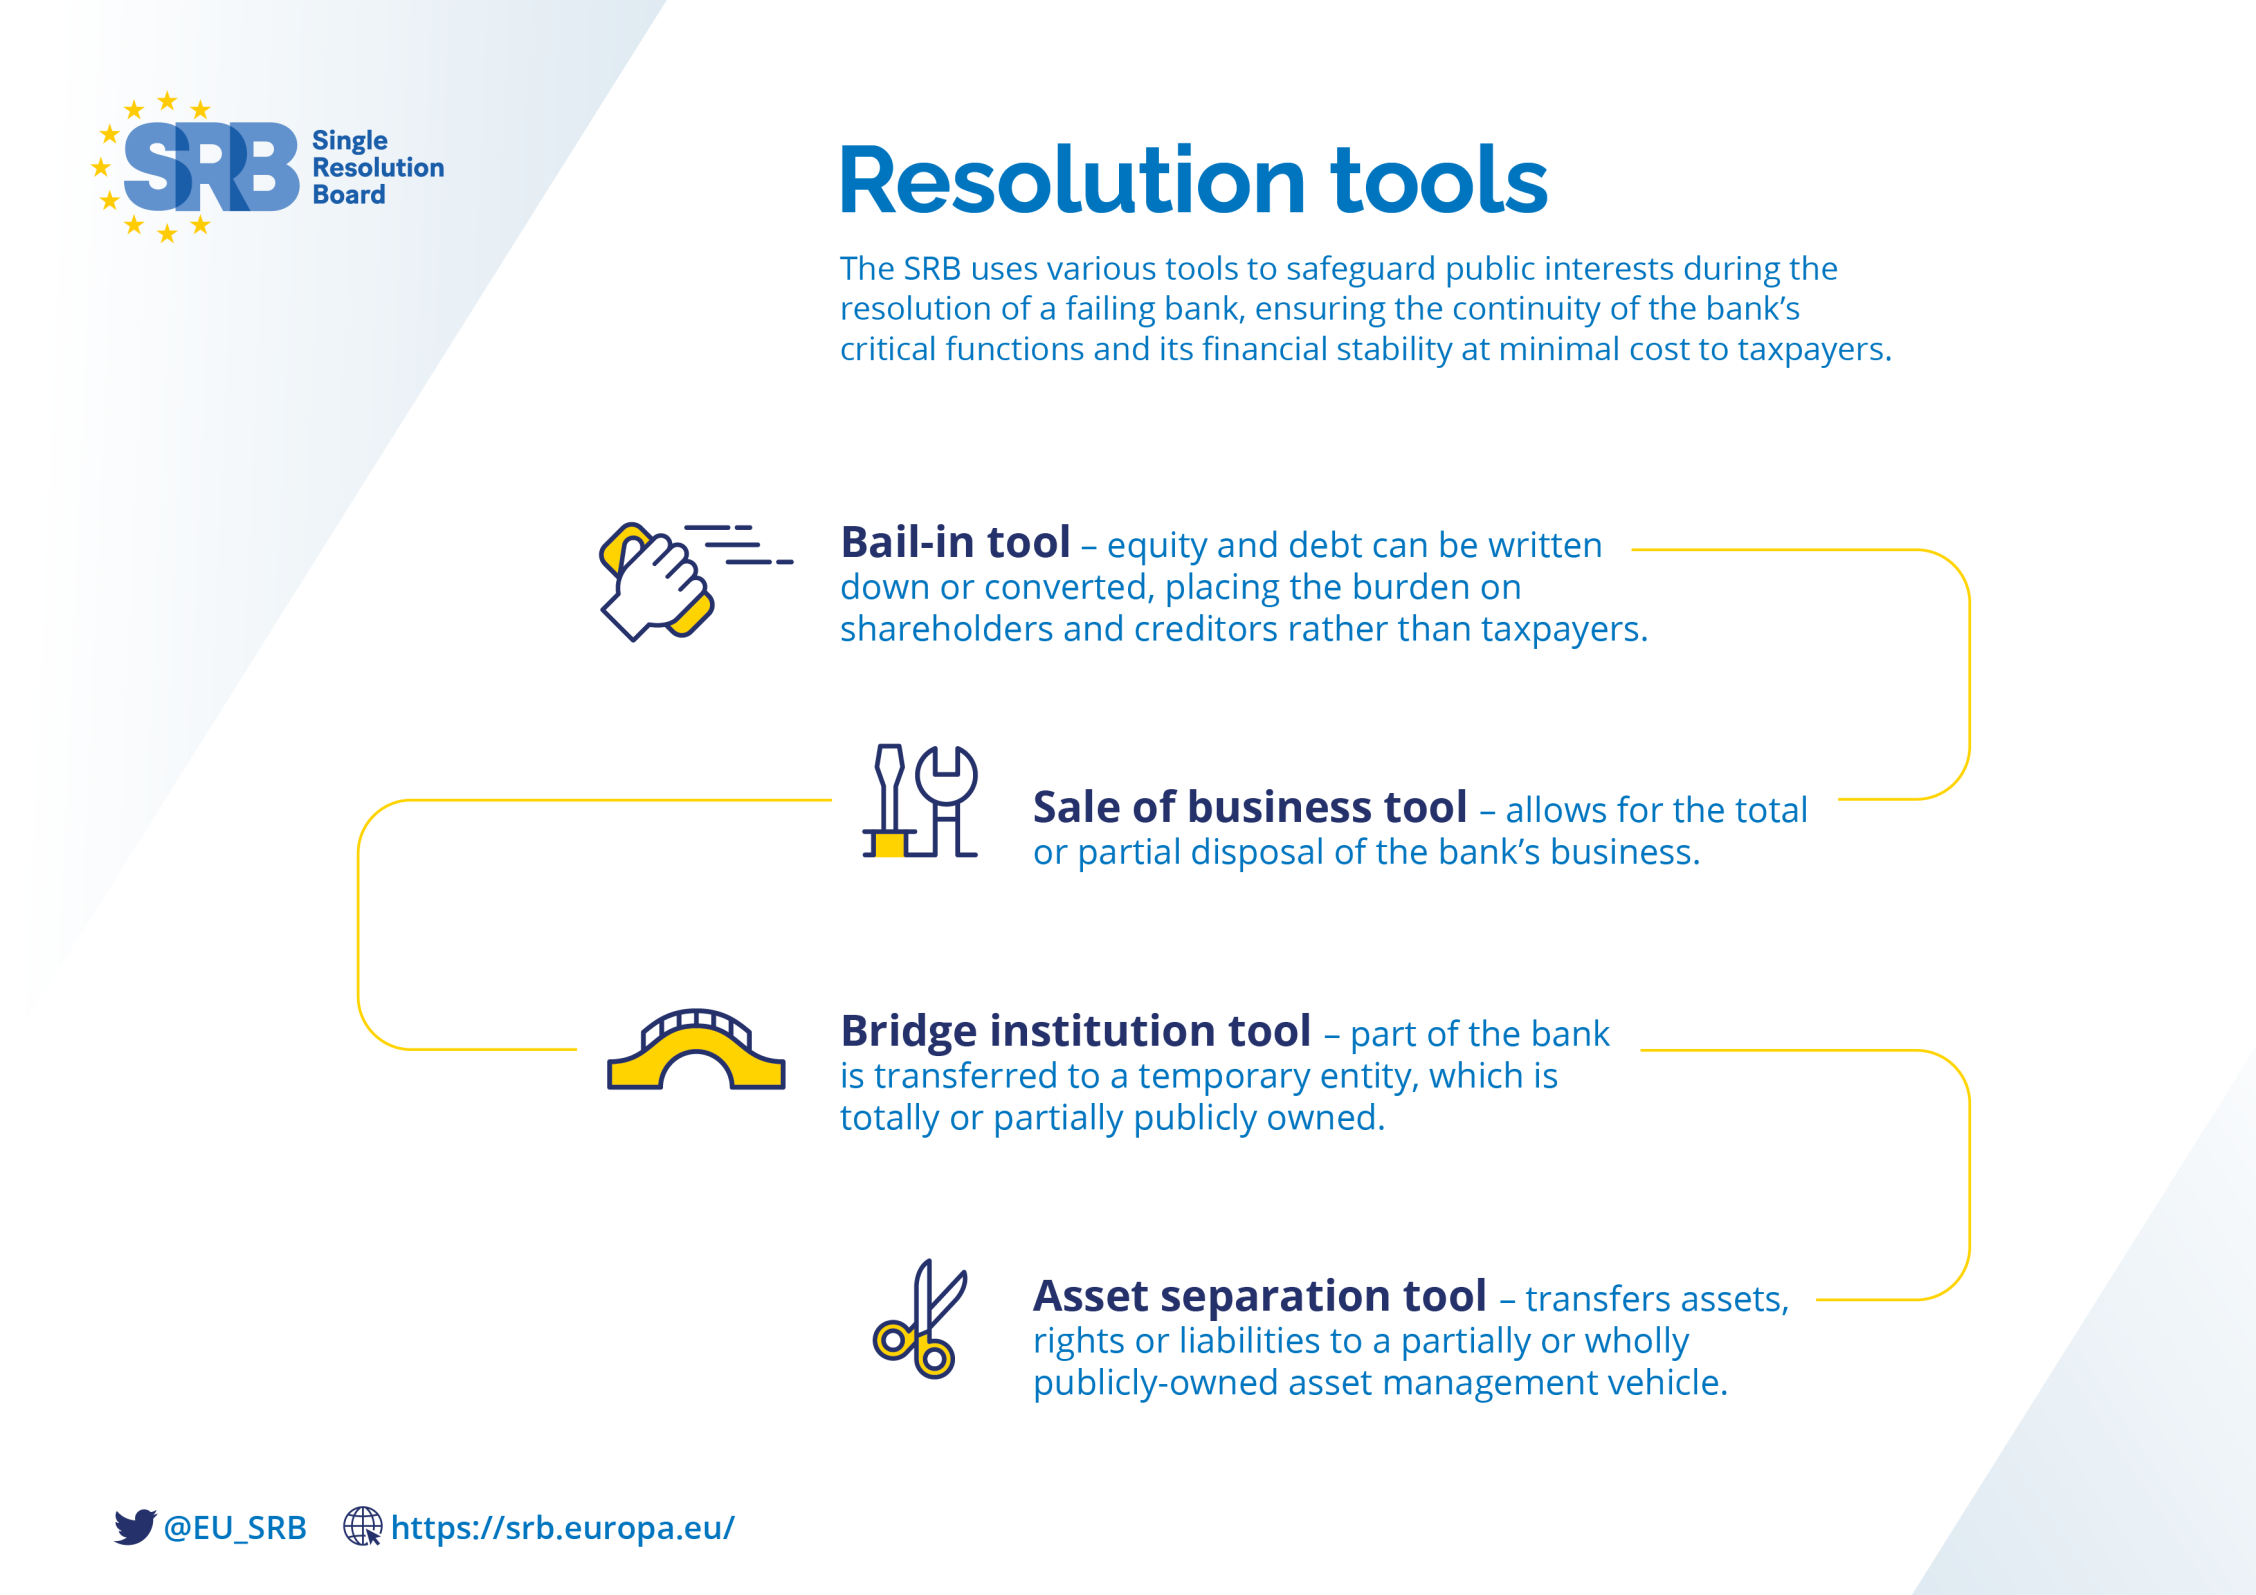 SRB Resolution tools